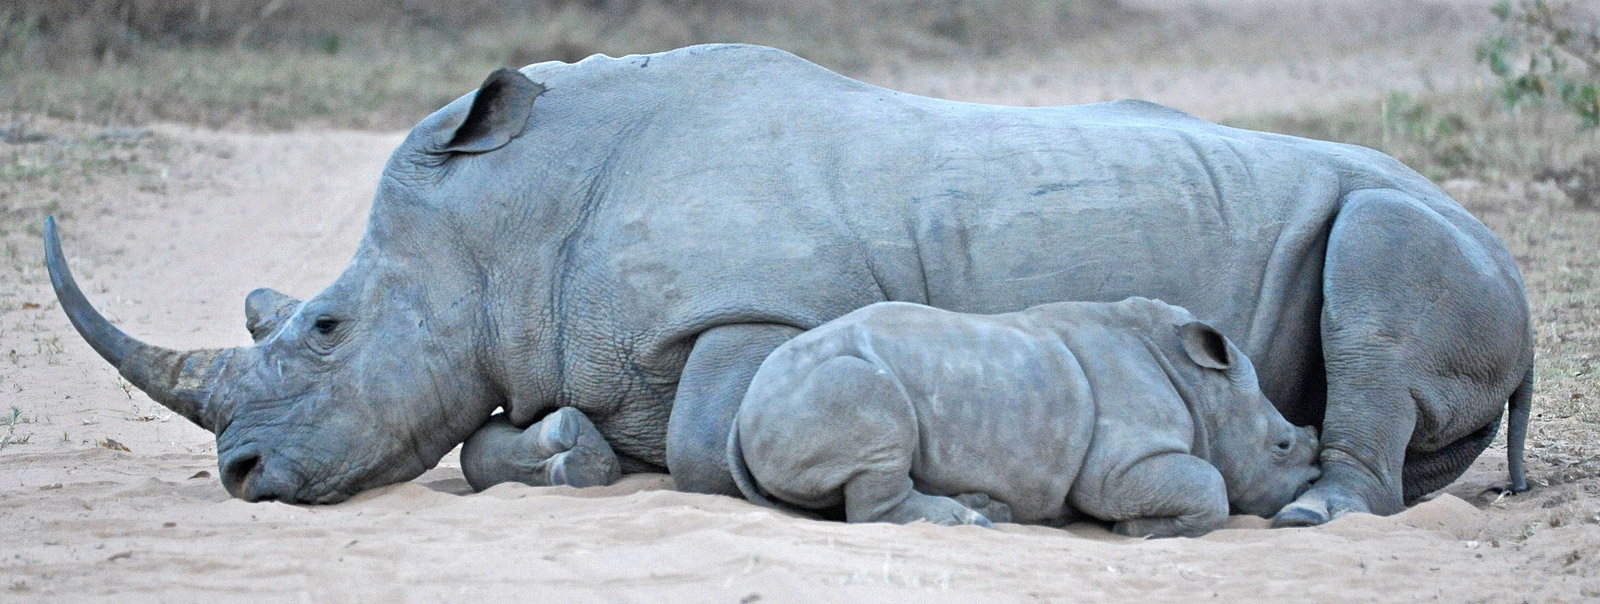 mother-and-calf-rhino-dex-kotze